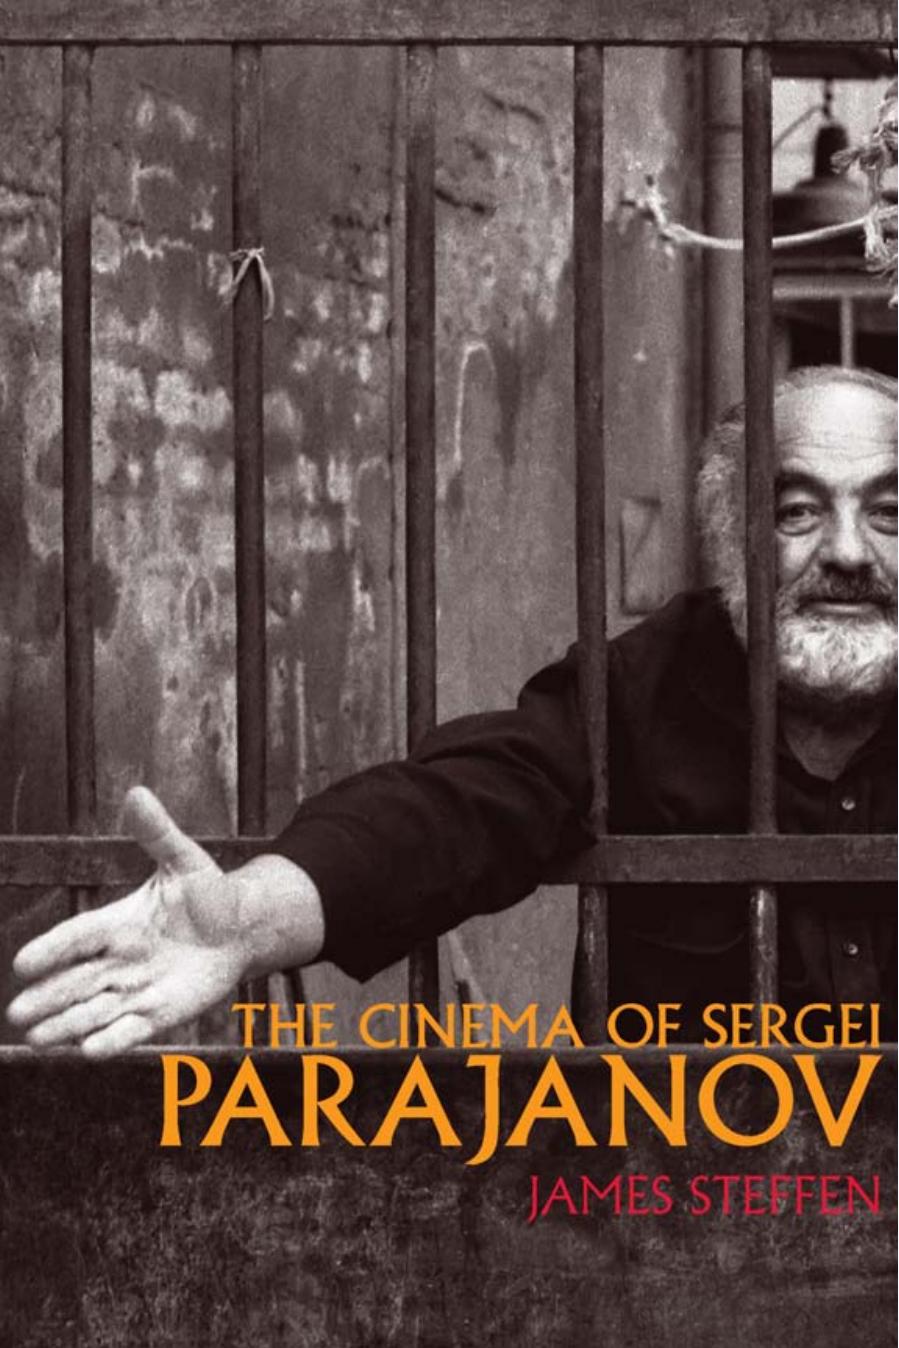 The Cinema of Sergei Parajanov by James Steffen